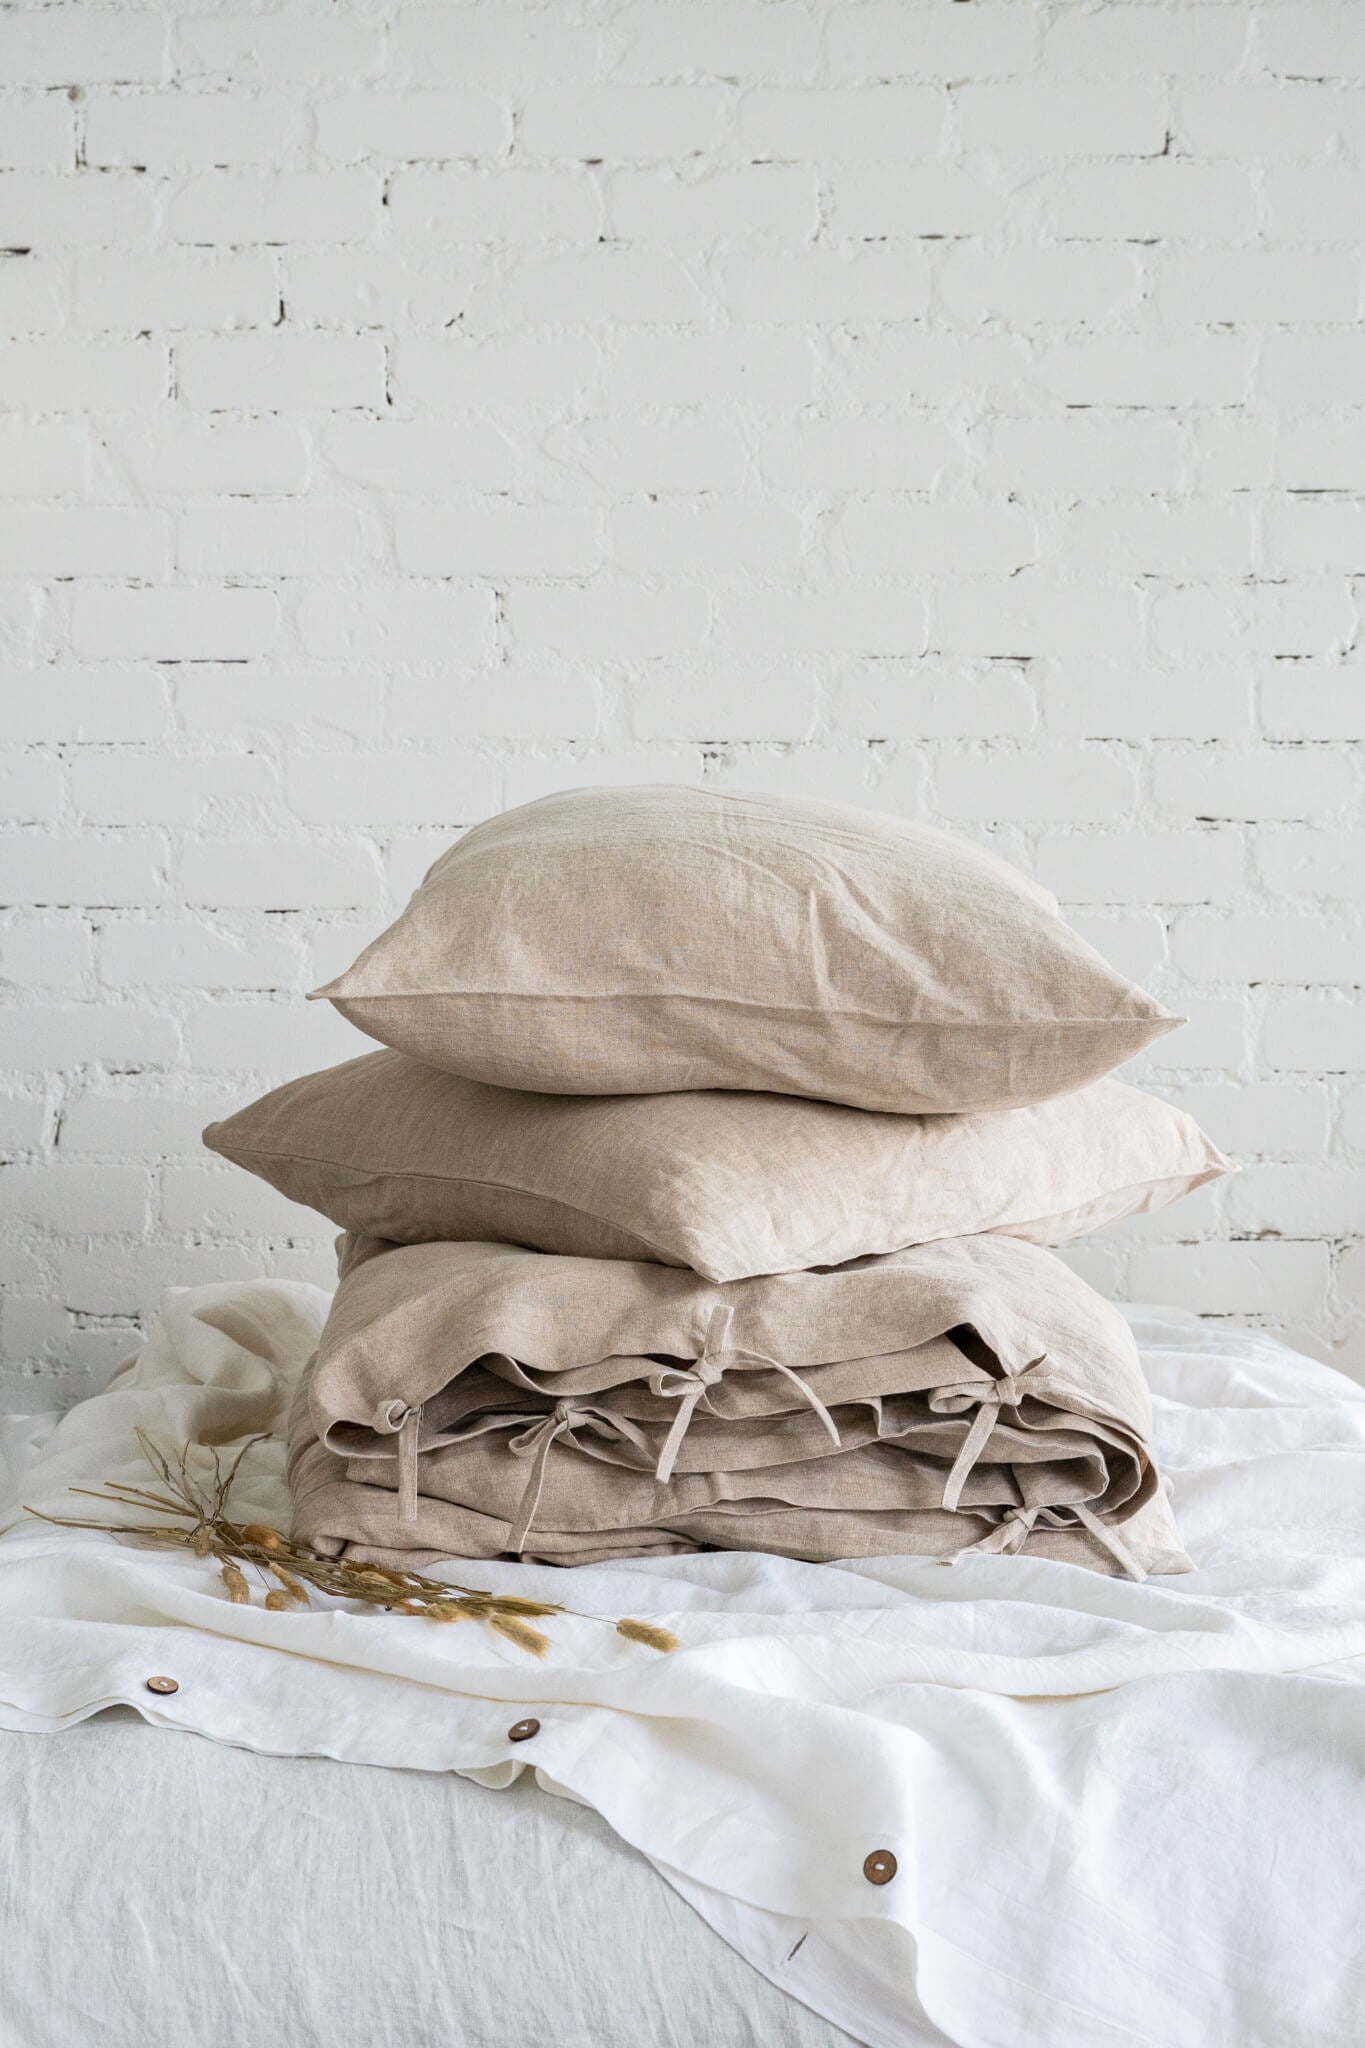 Linen bedding set in Natural: linen duvet cover + 2 linen pillowcases